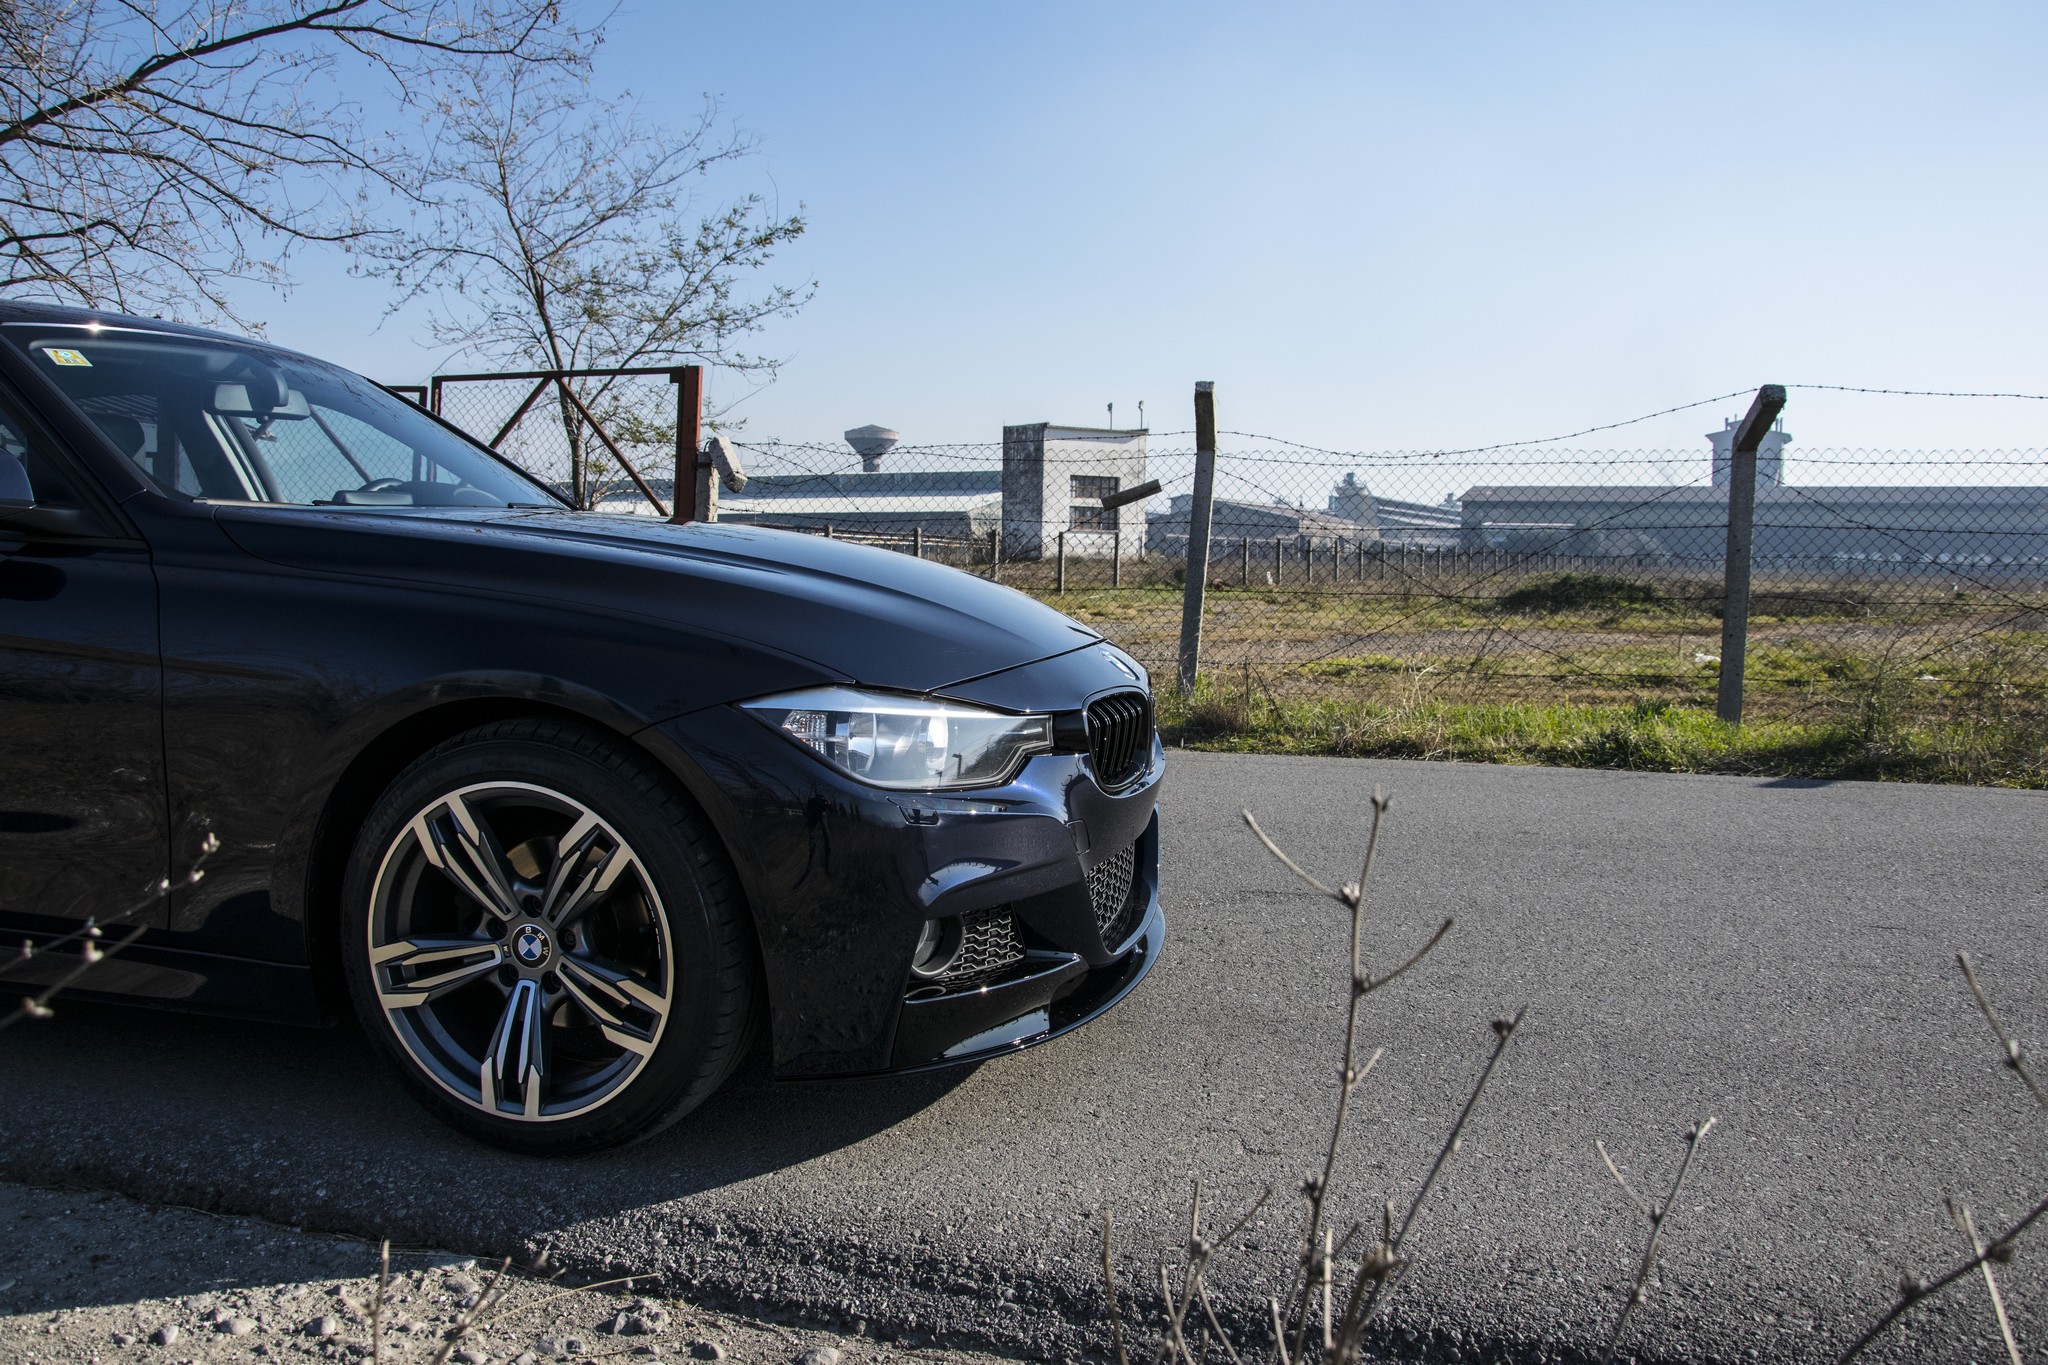 BMW F30 320d M Performance Sport Test by AutoNovosti